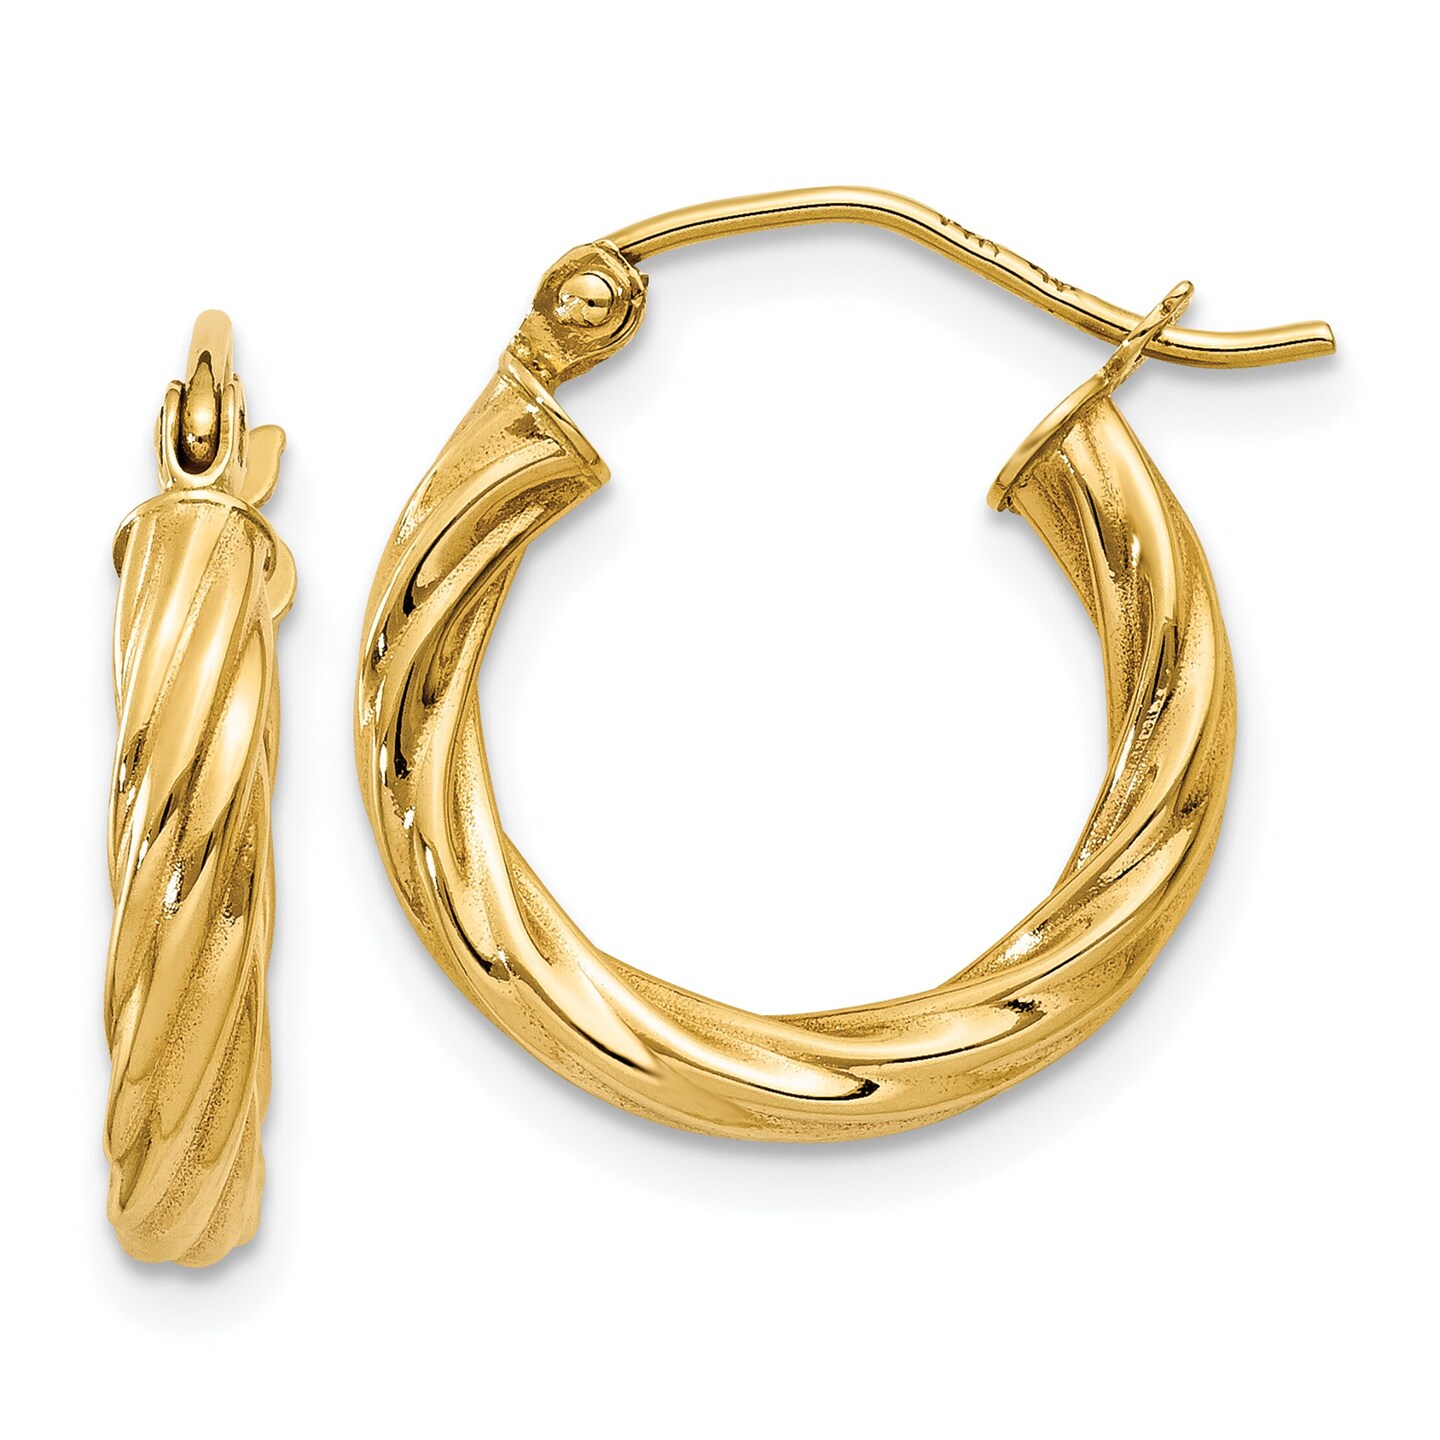 14K Yellow Gold Twisted Hoop Earrings Jewelry 17mm x 15mm